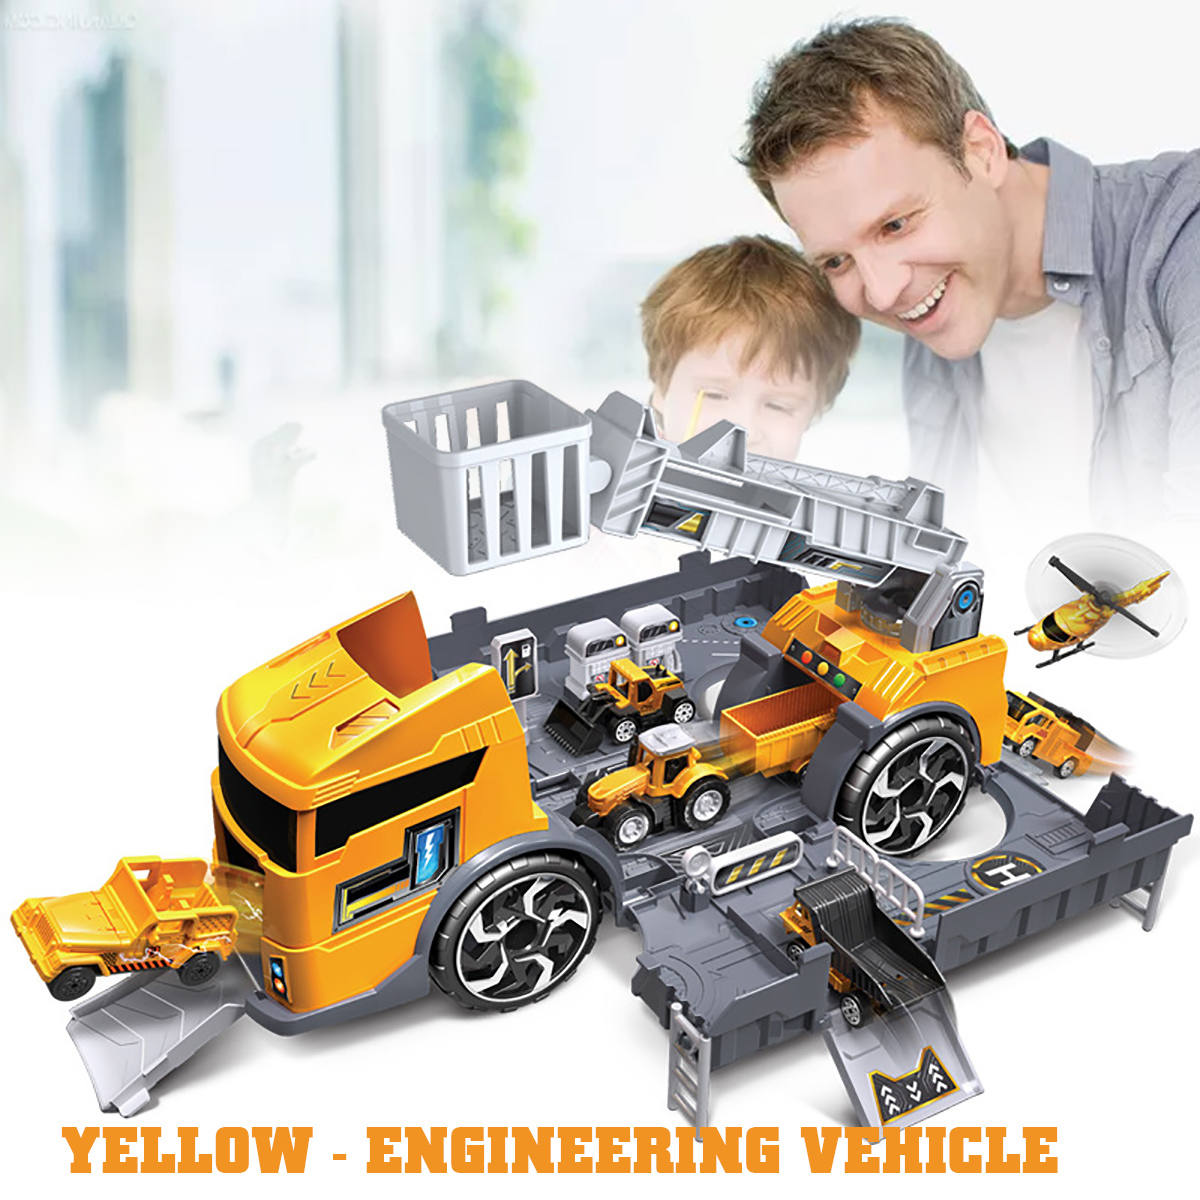 Childrens-Simulation-Diecast-Engineering-Vehicle-Model-Set-Deformation-Storage-Parking-Lot-Education-1555038-9